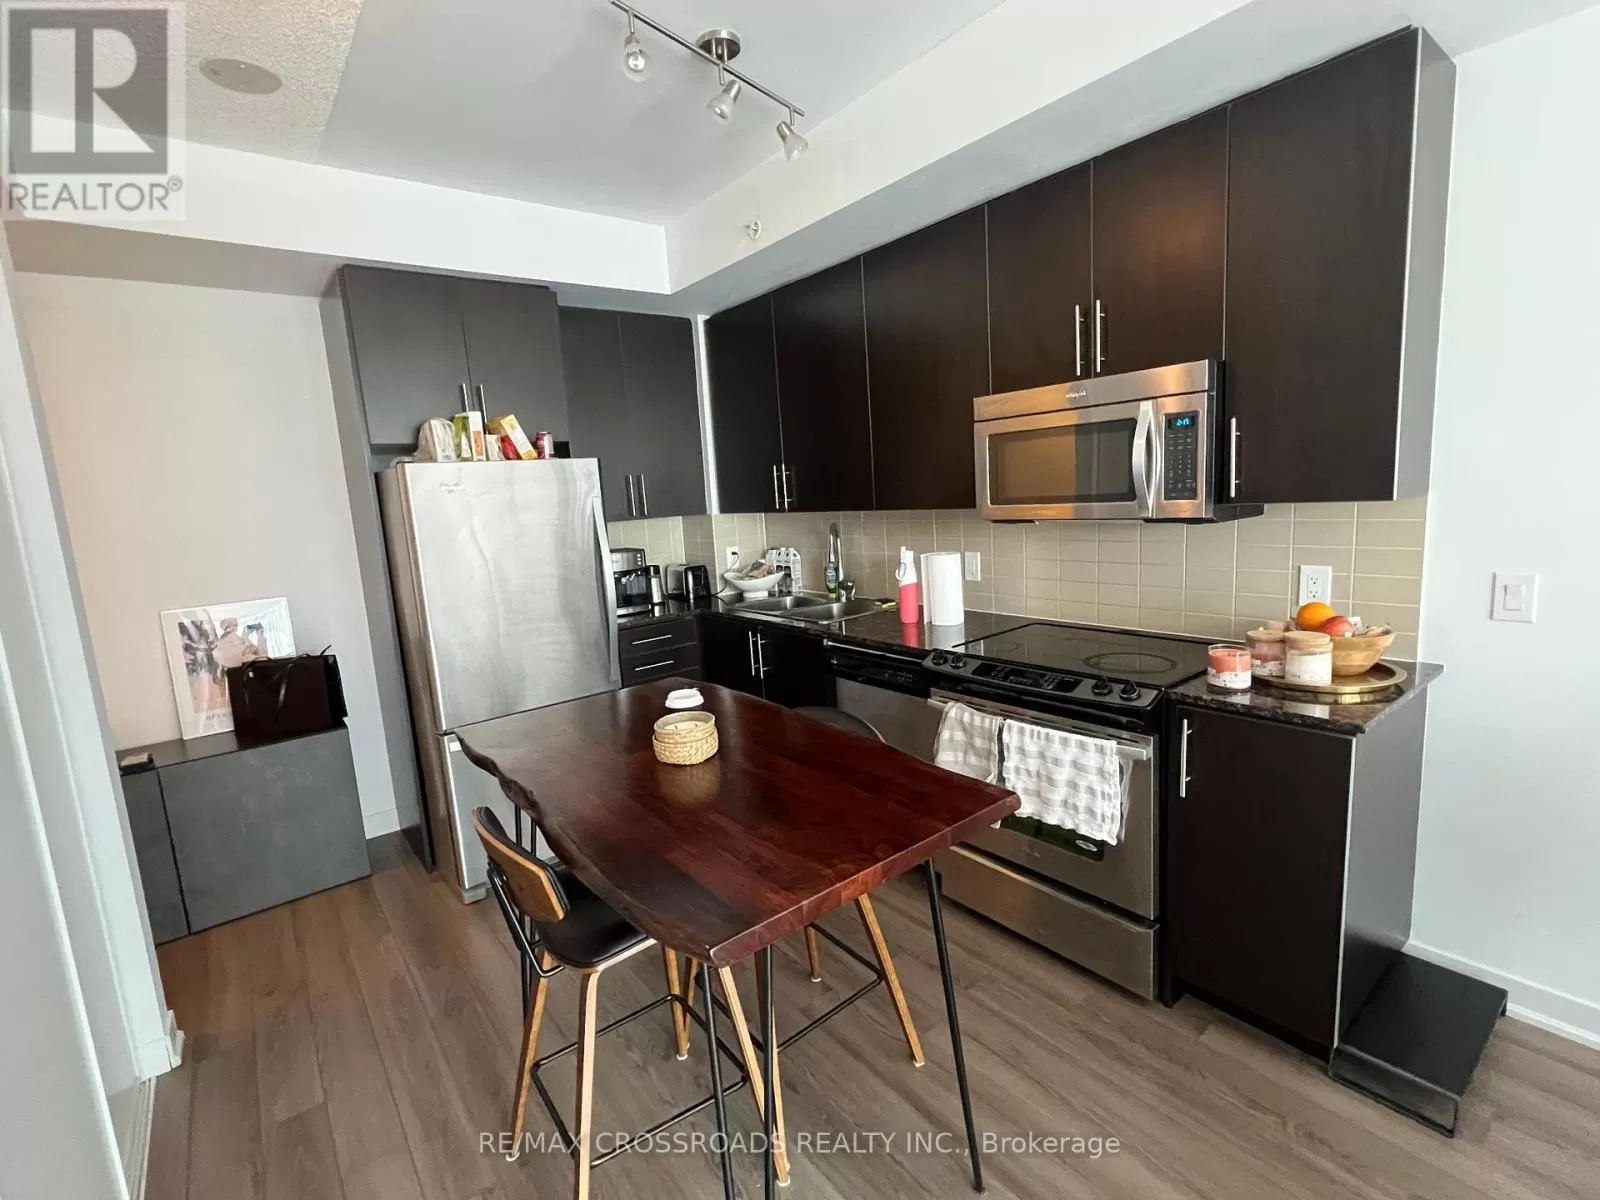 Apartment for rent: 1301 - 60 Berwick Avenue, Toronto, Ontario M5P 0A3